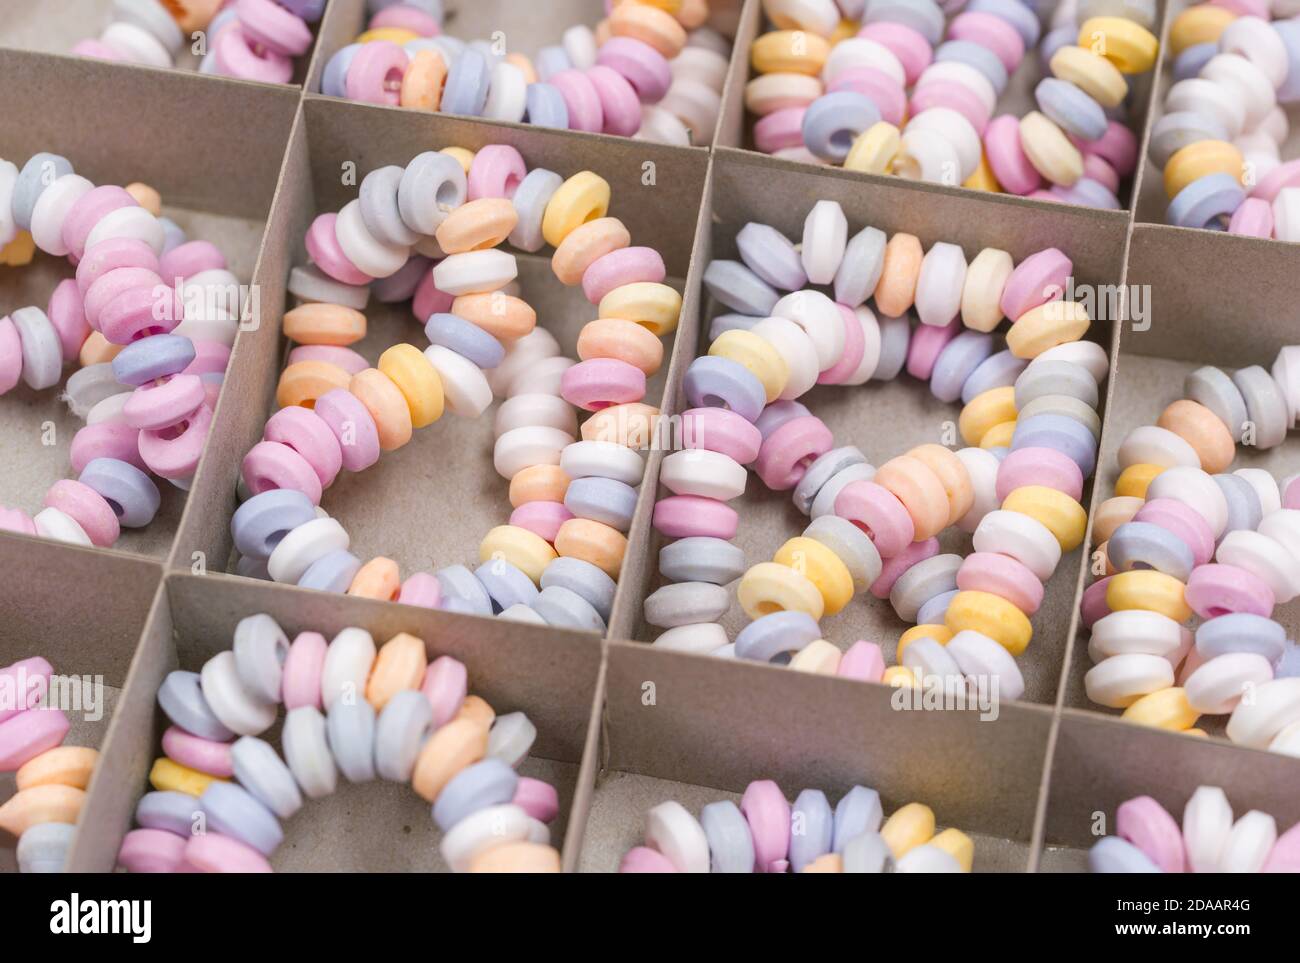 sugar bracelets in a cardboard box Stock Photo